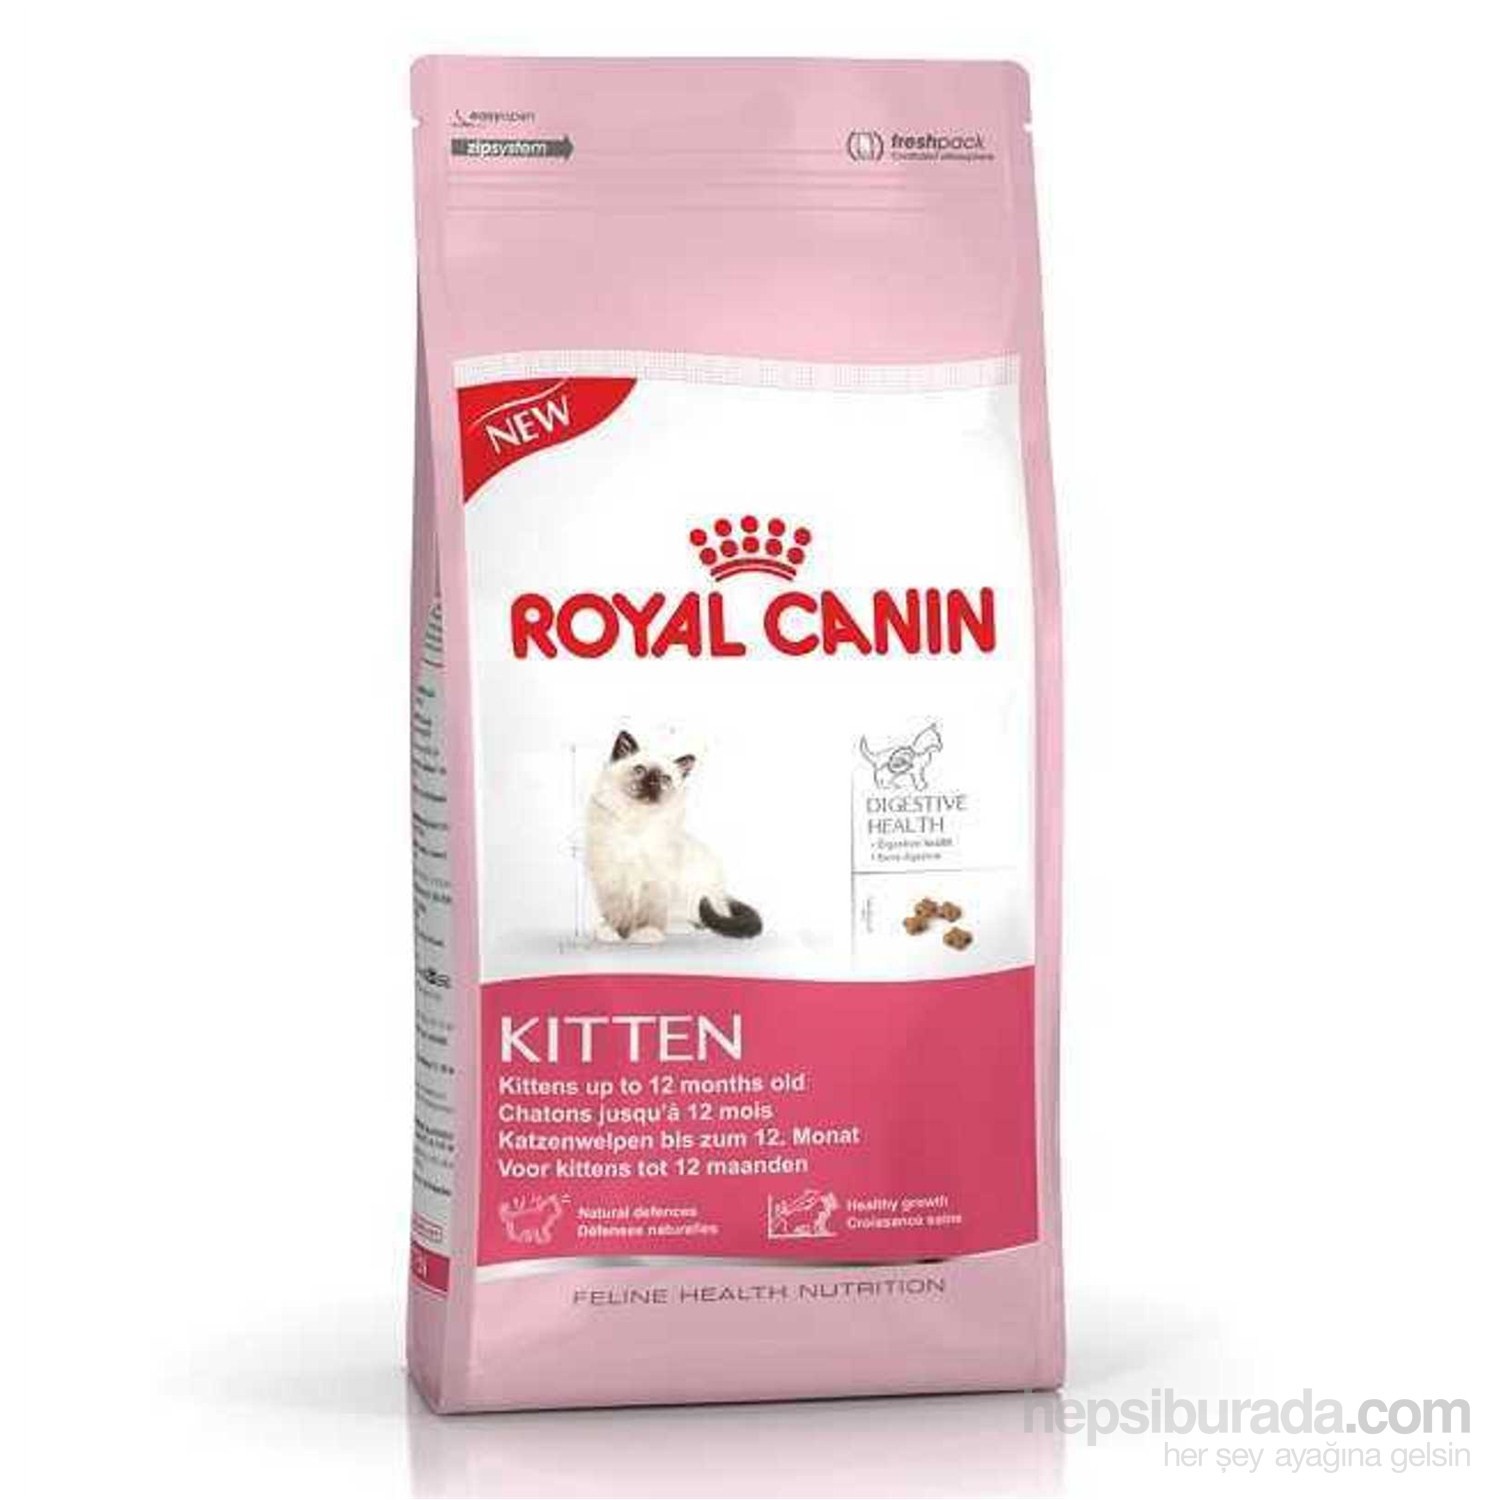 Royal Canin 36 Kitten Yavru Kuru Kedi Maması 2 kg Fiyatı